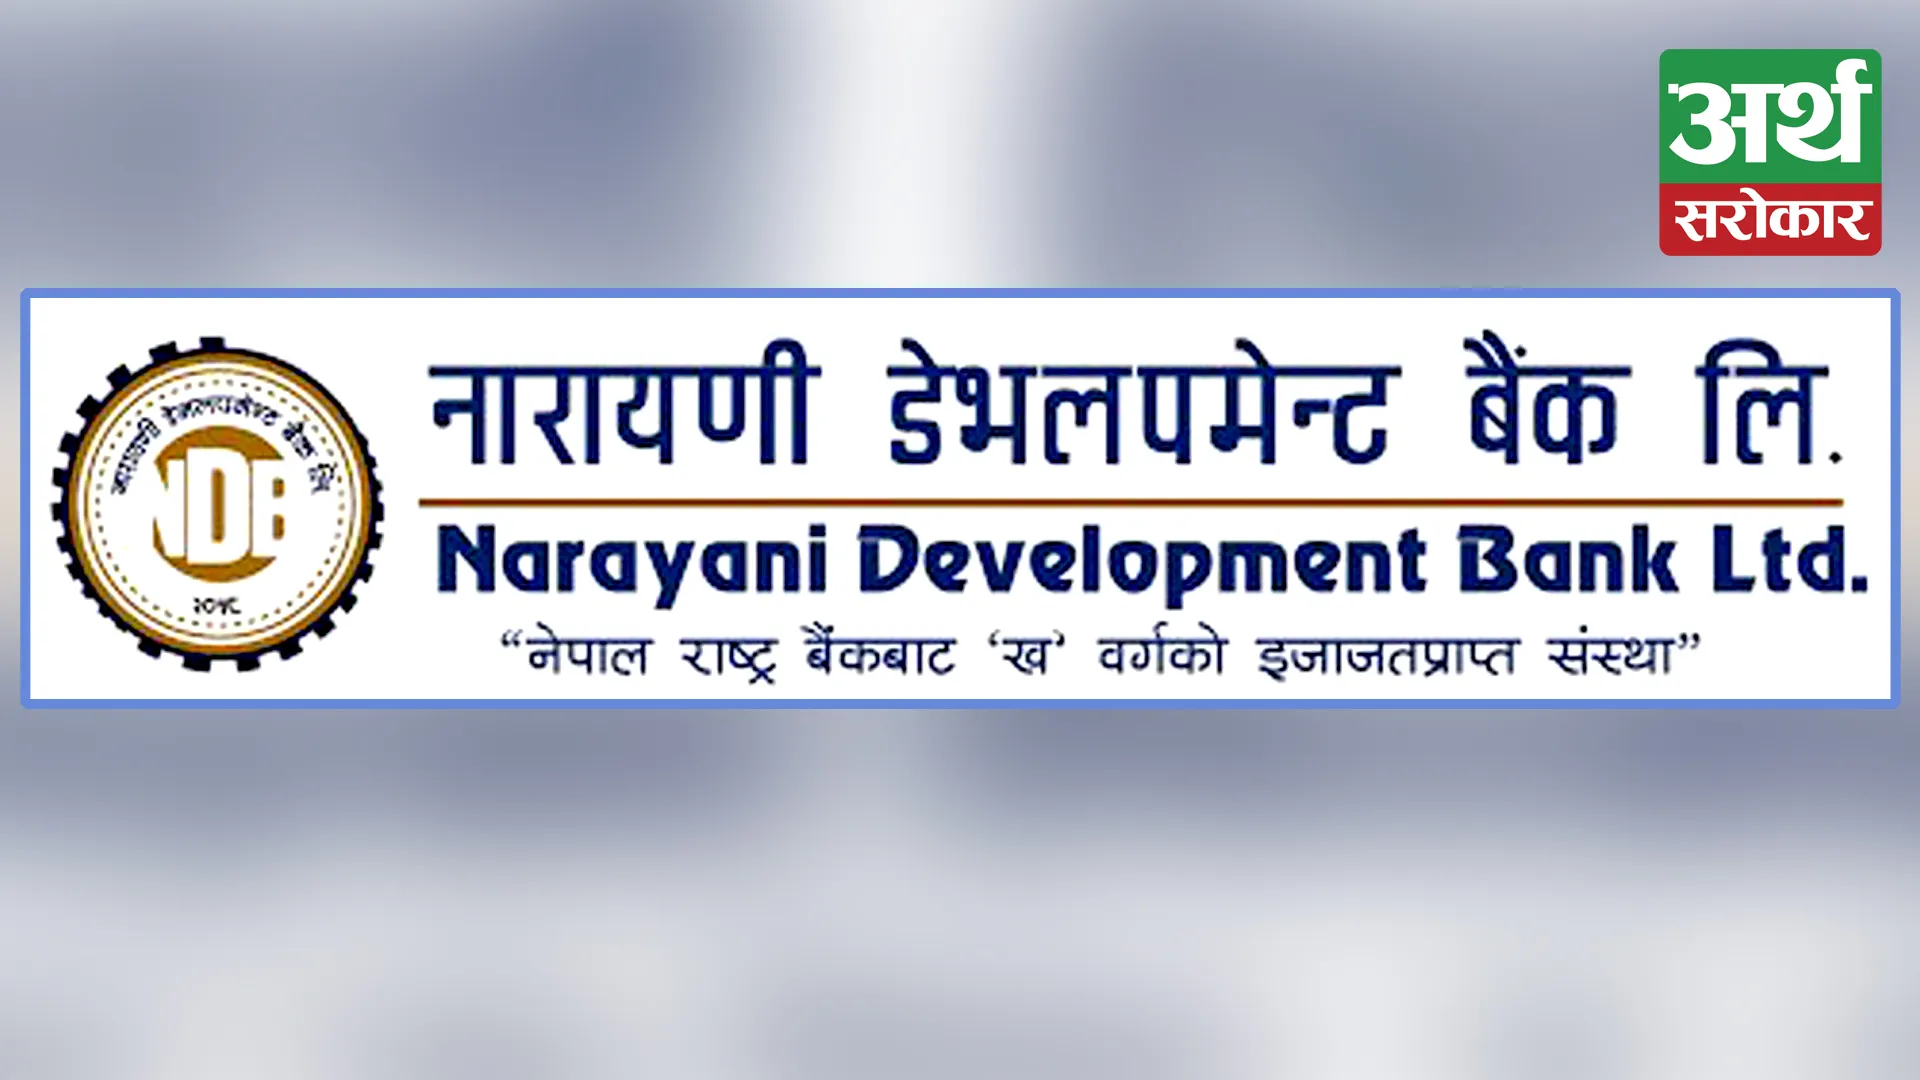 Nepal Rastra Bank takes action against Narayani Development Bank